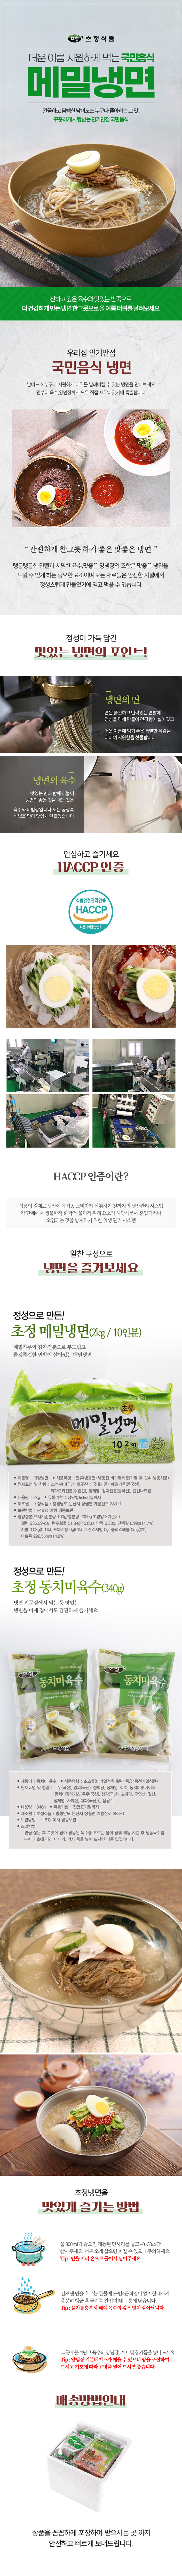 22_chojung_dong_maemil_page.jpg